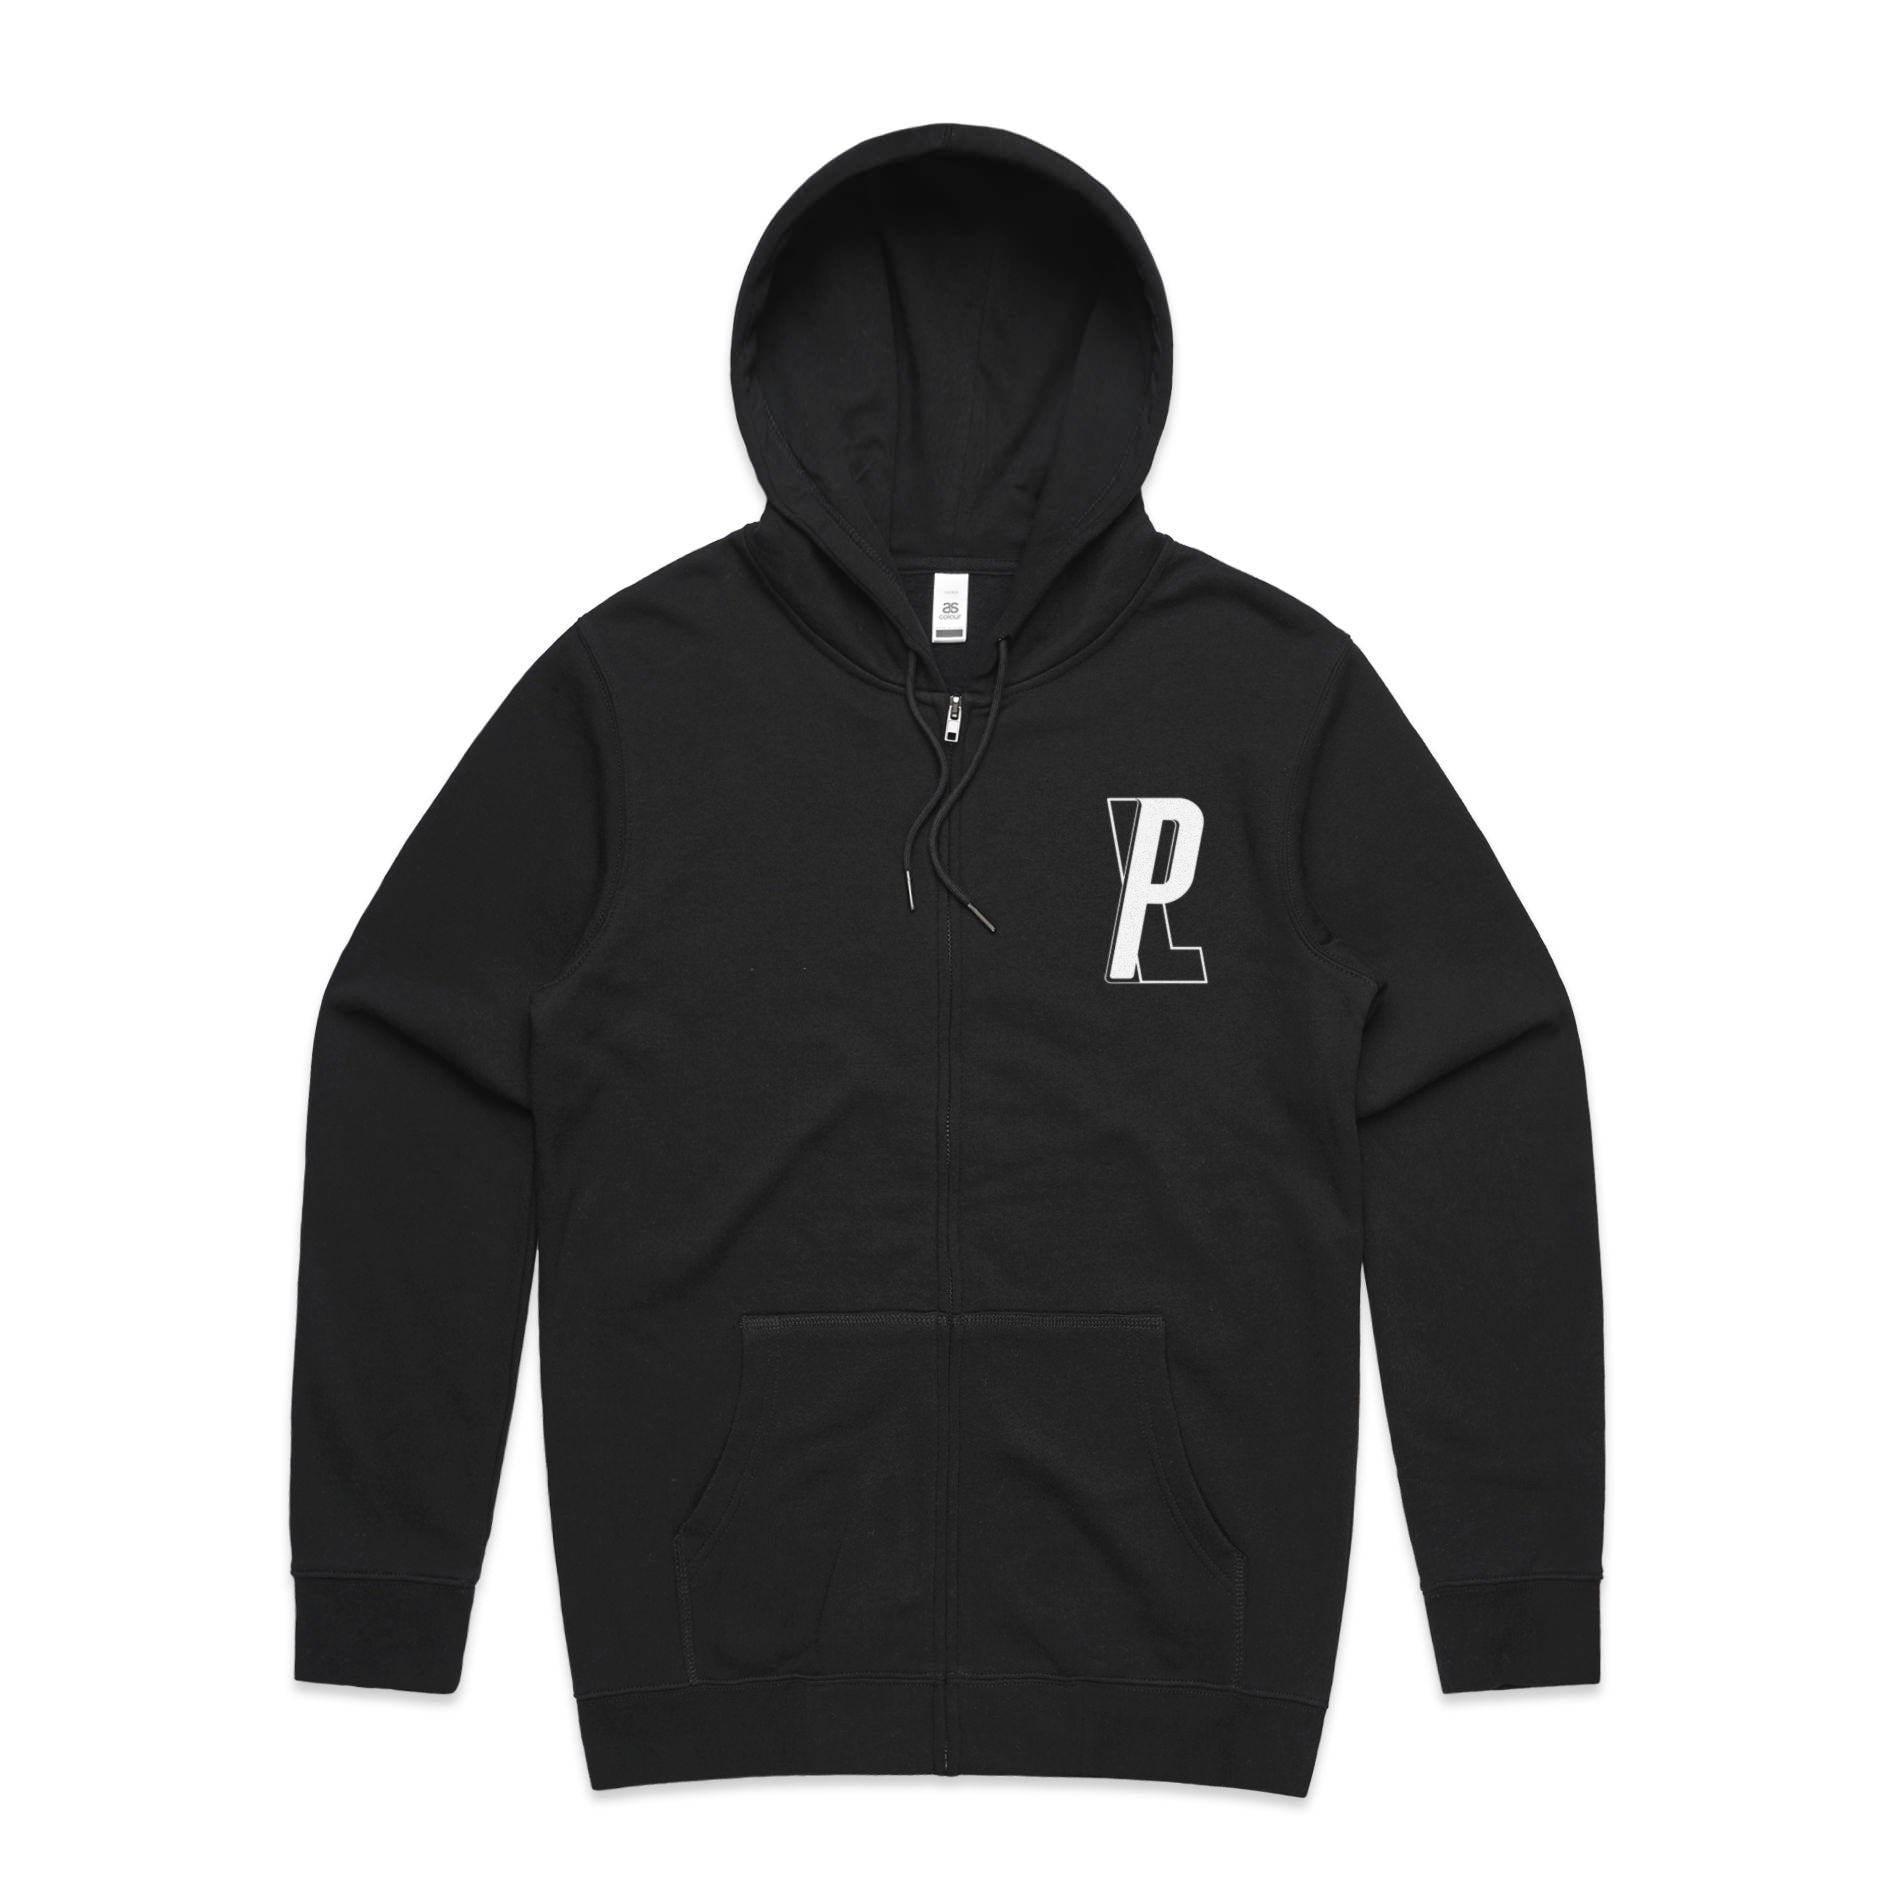 Pirate Life Zip-up hoodies – PIRATE LIFE BREWING